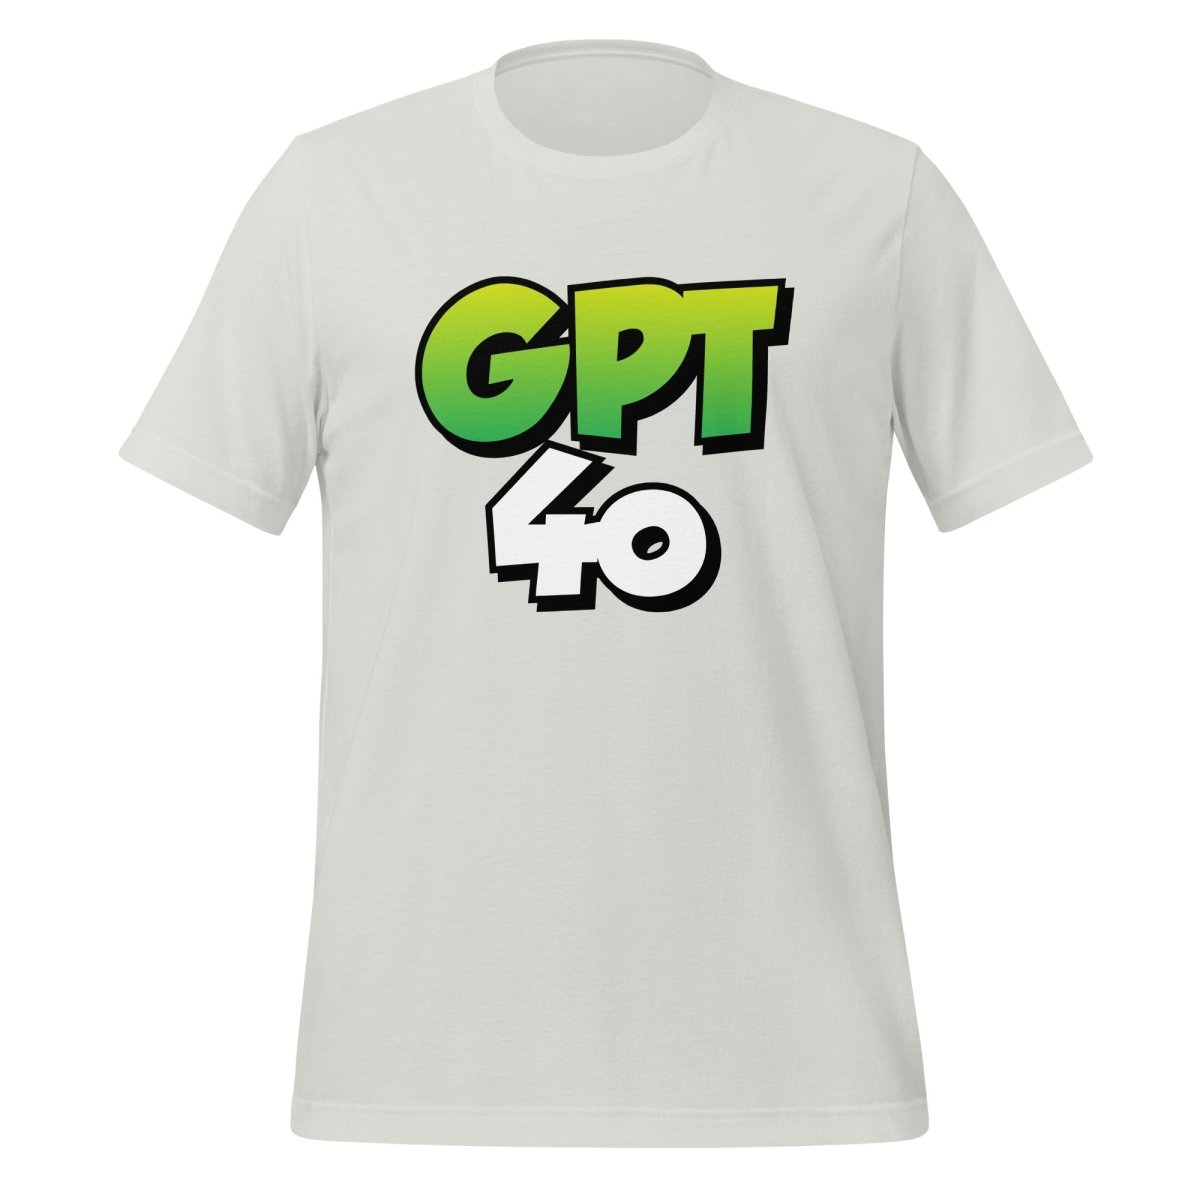 GPT 4o Ben 10 - Style T - Shirt (unisex) - Silver - AI Store